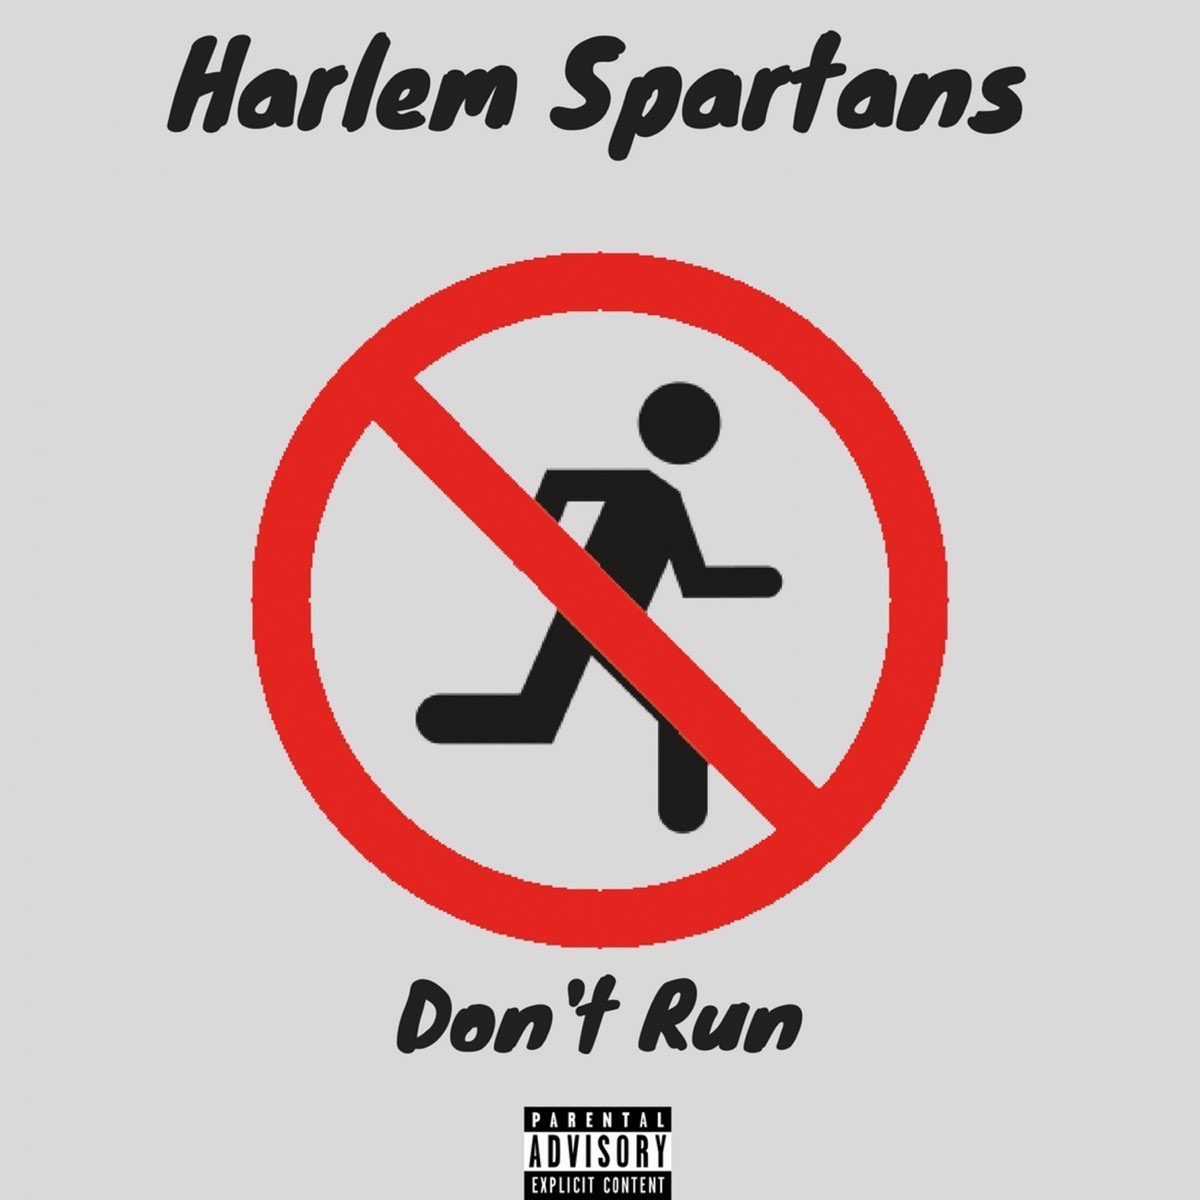 You can walk here. Don't Run. Harlem Spartans. Ran didn't Run. Don't Run here.